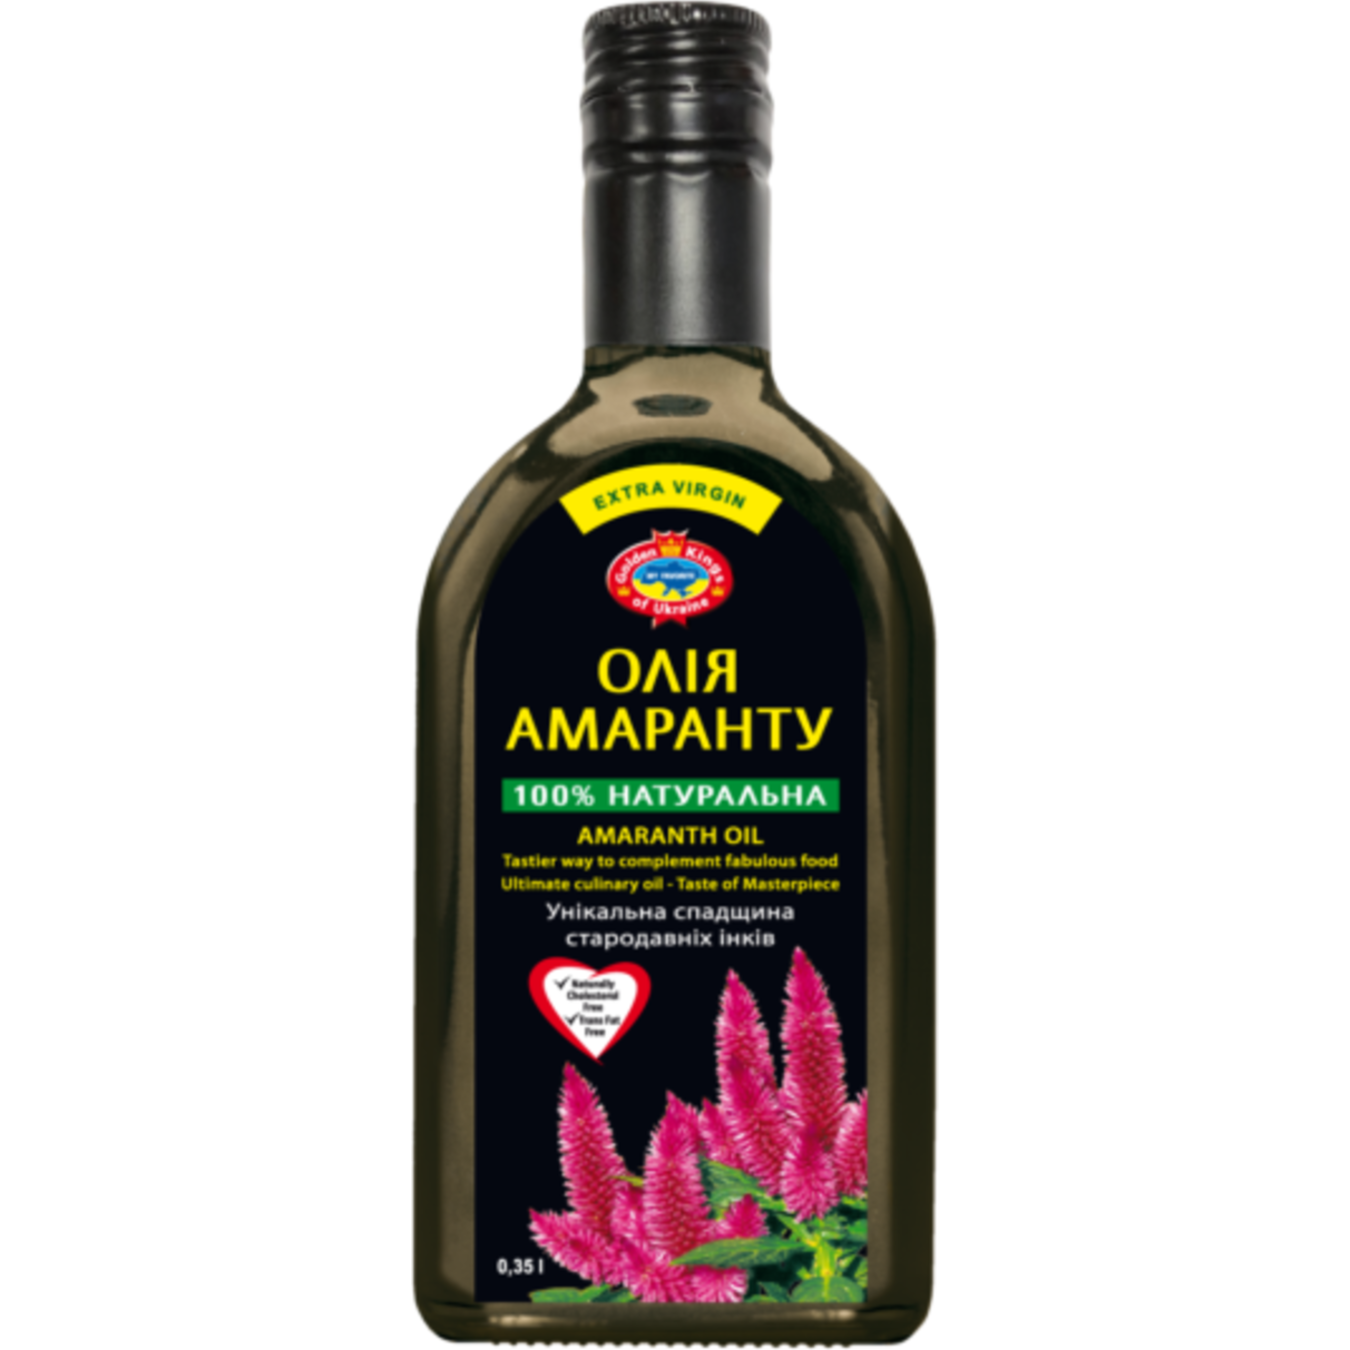 Amaranth oil Golden Kings of Ukraine amaranth oil extract 0.35 l